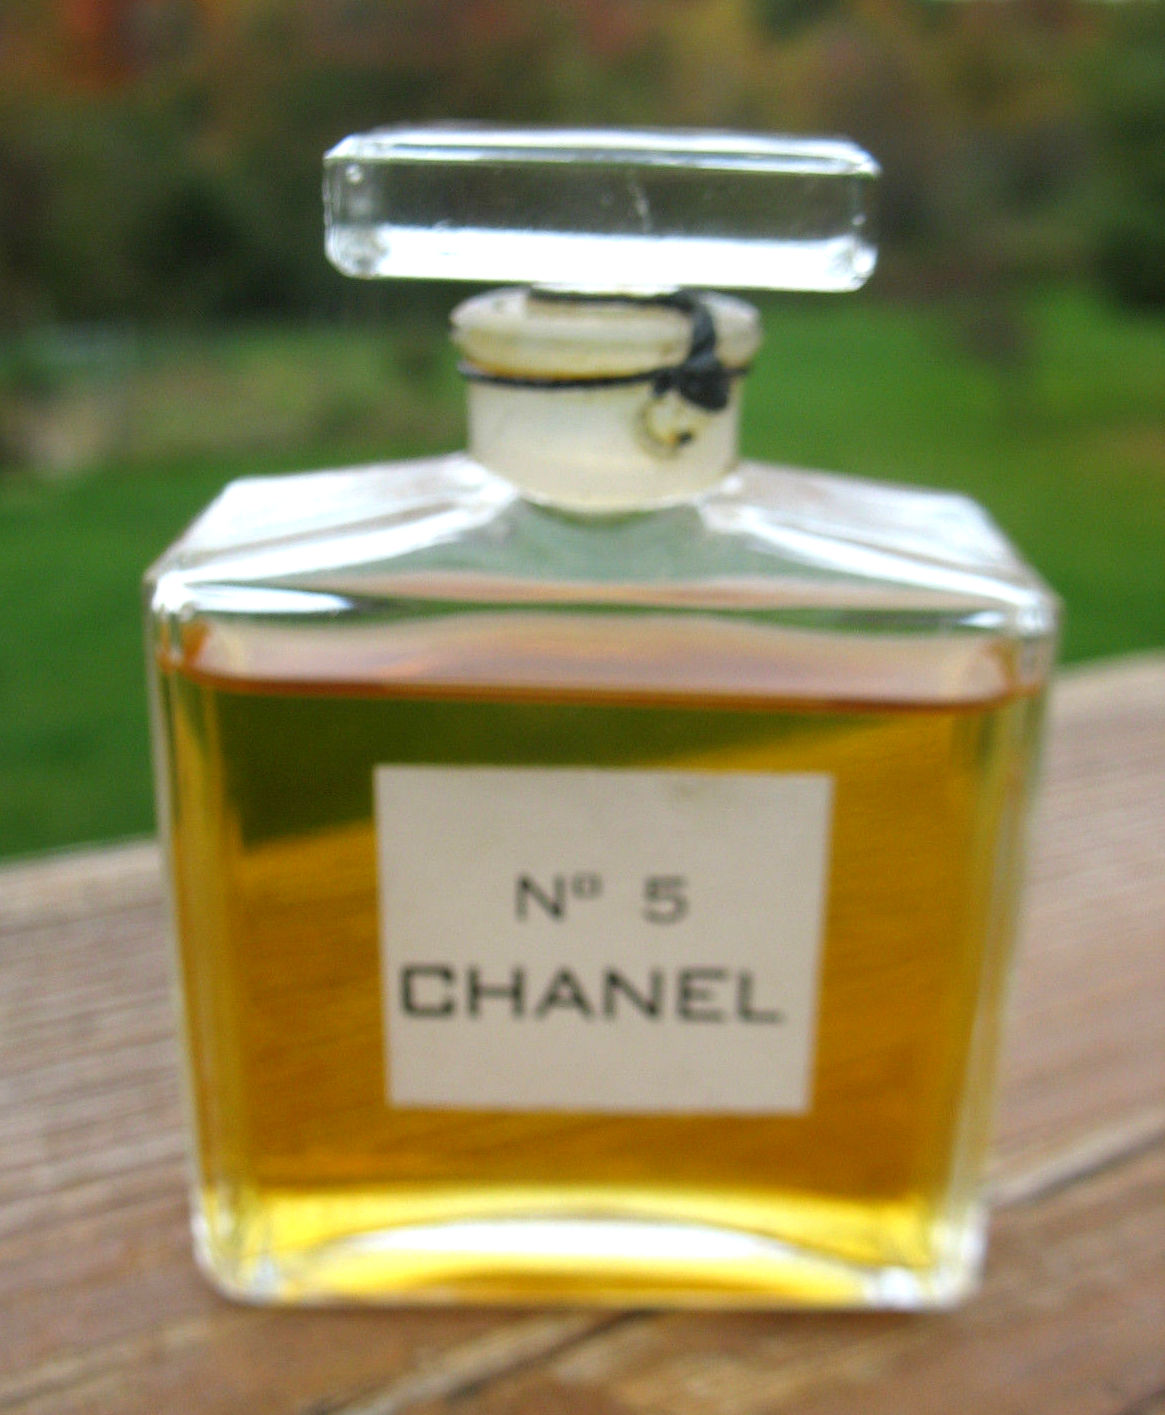 Chanel Perfume Bottles: FAKE Chanel Perfume on